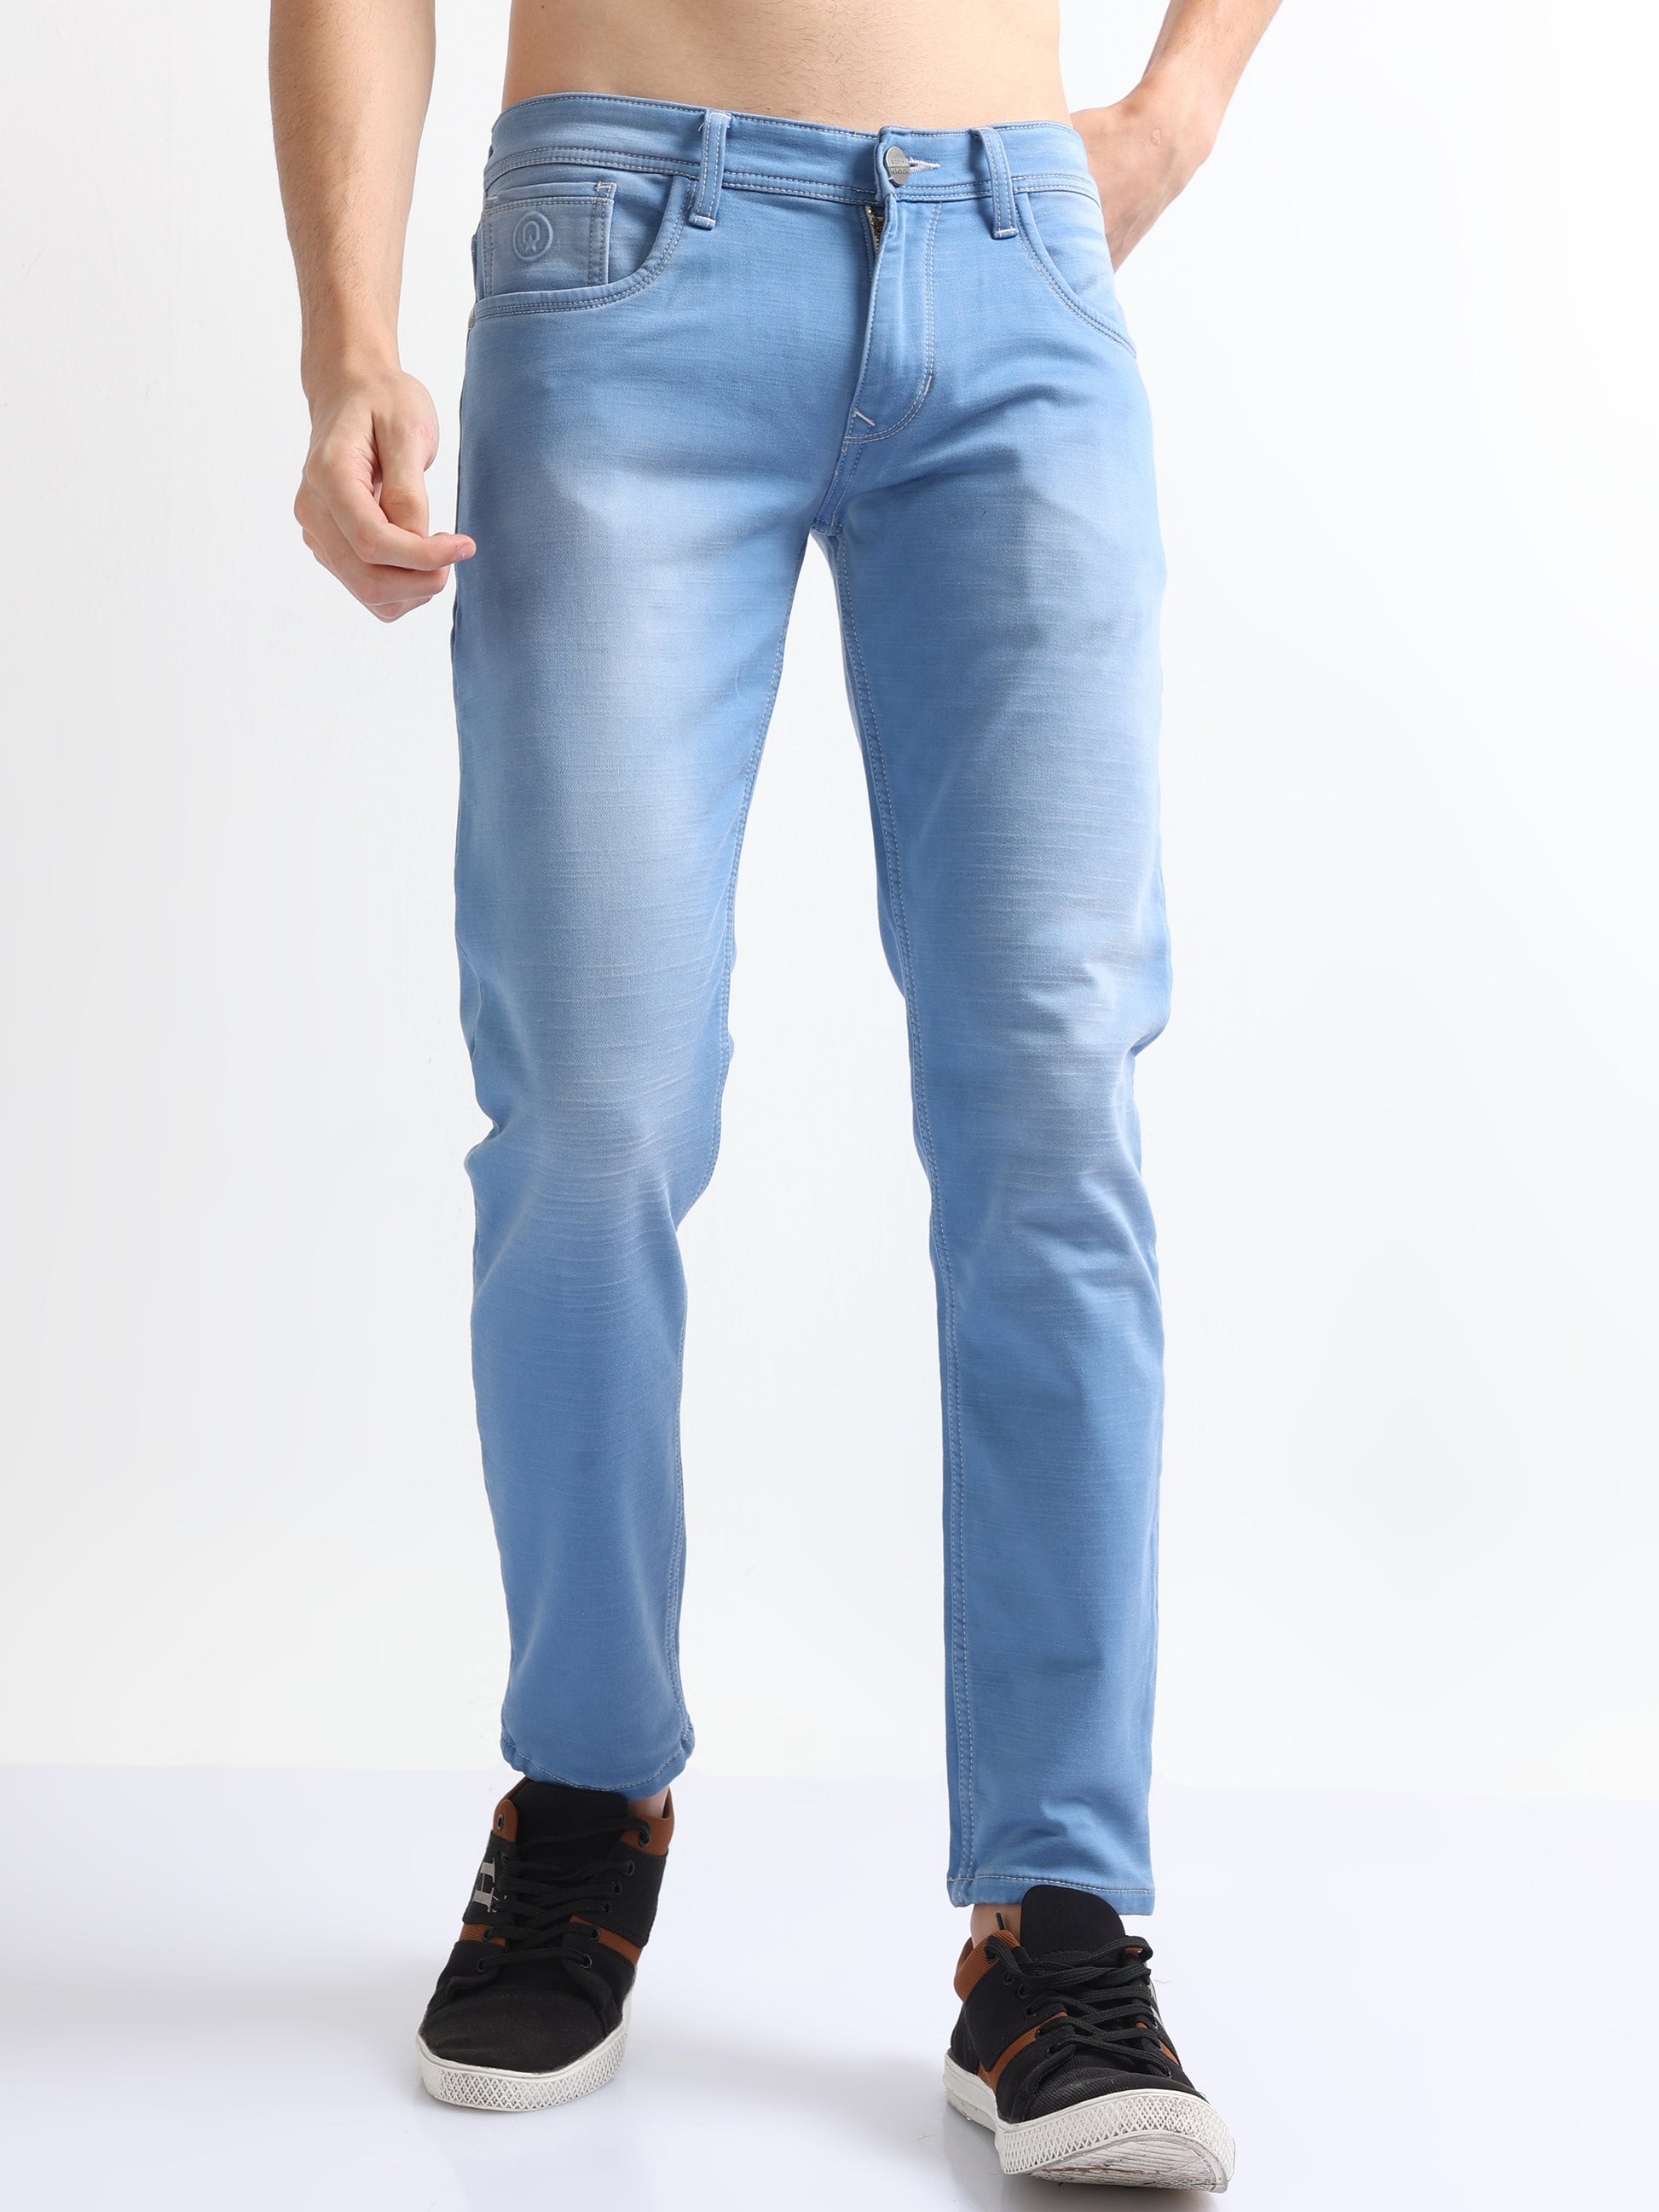 Blue Colored Textured Men's Jeans